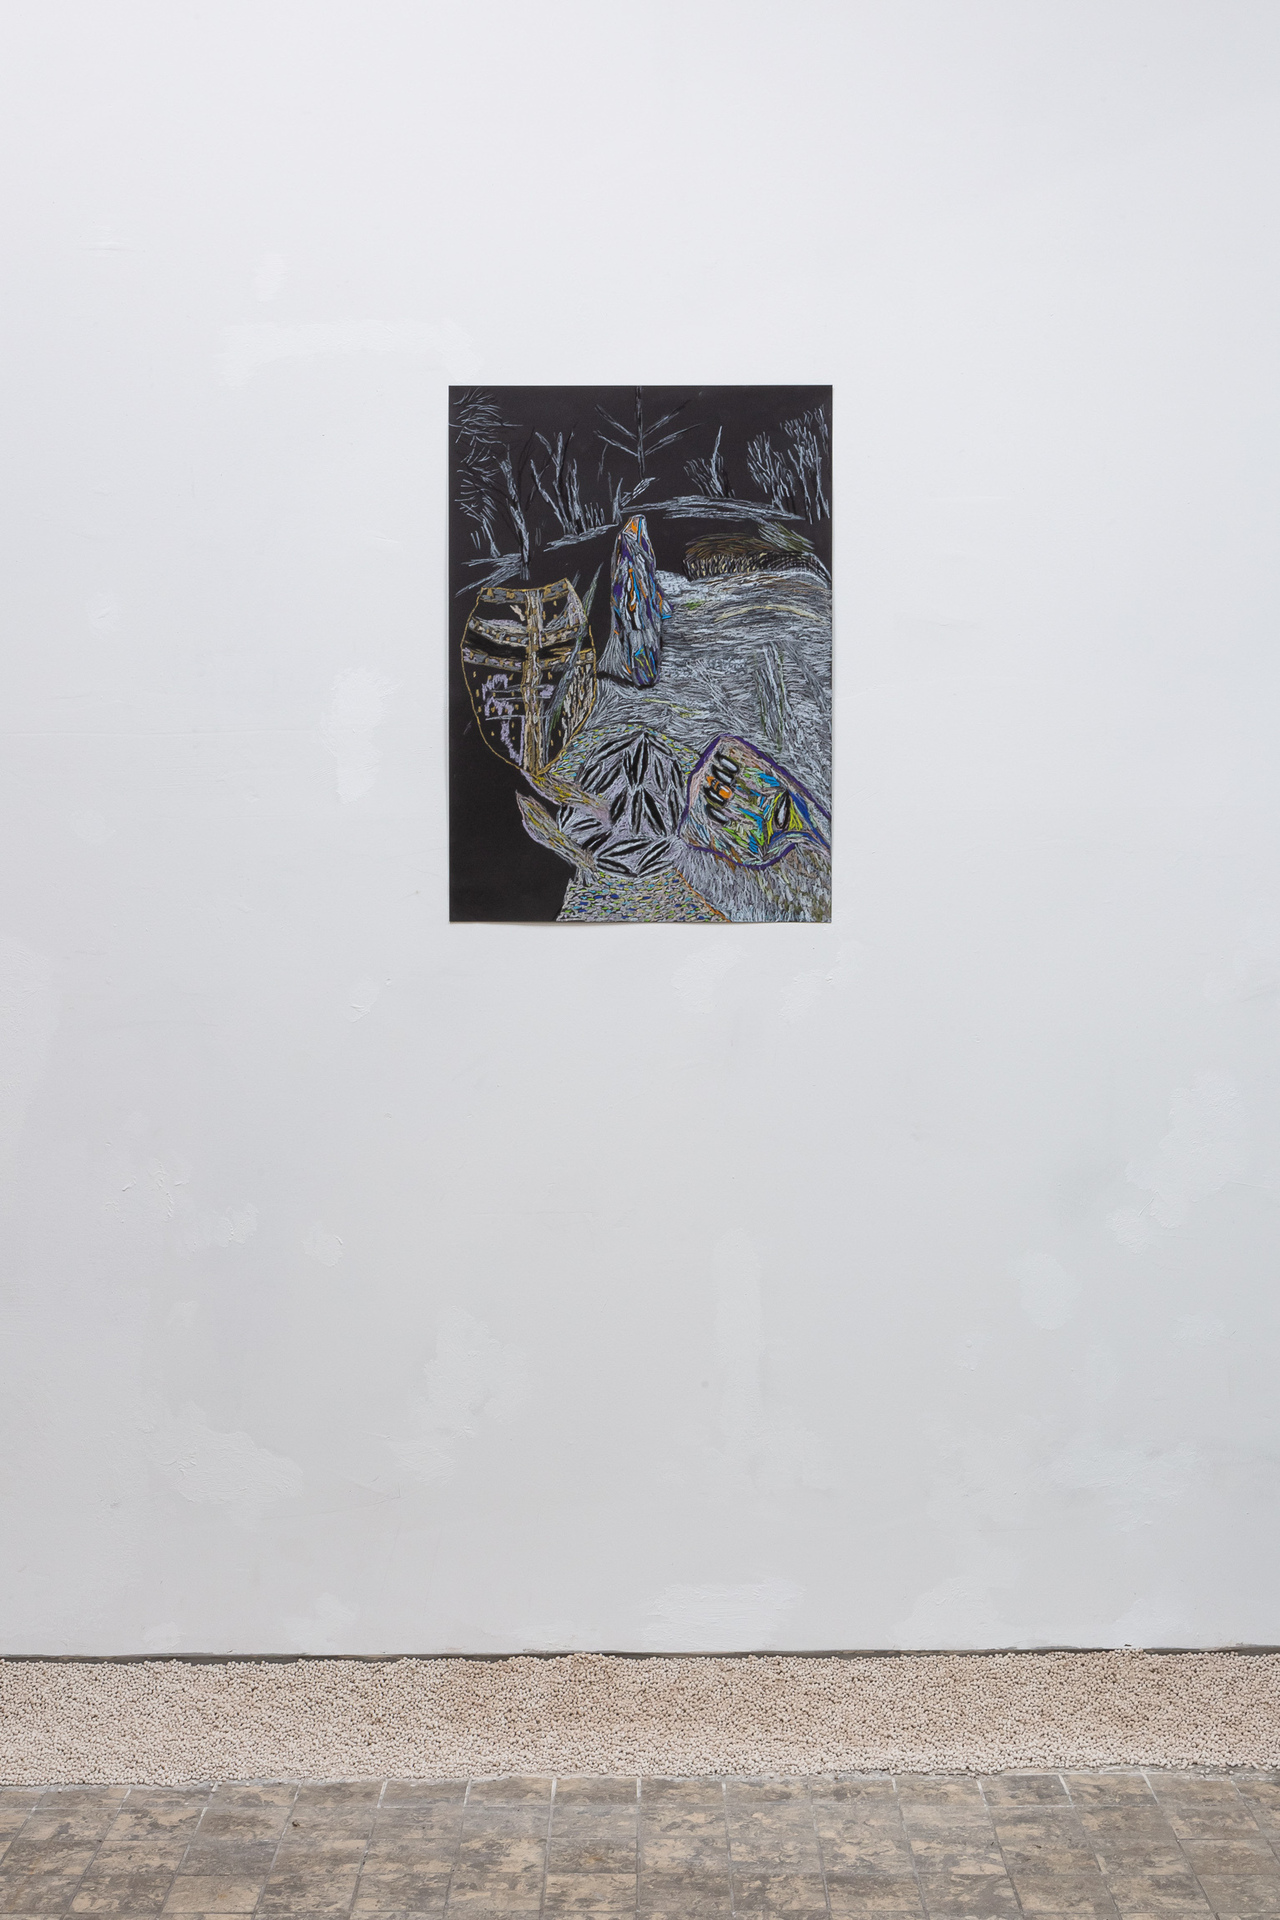 Elvira Axt, selfreflection in snow landscape, 2020, oil pastel on paper, 80 x 60 cm, Install 2.